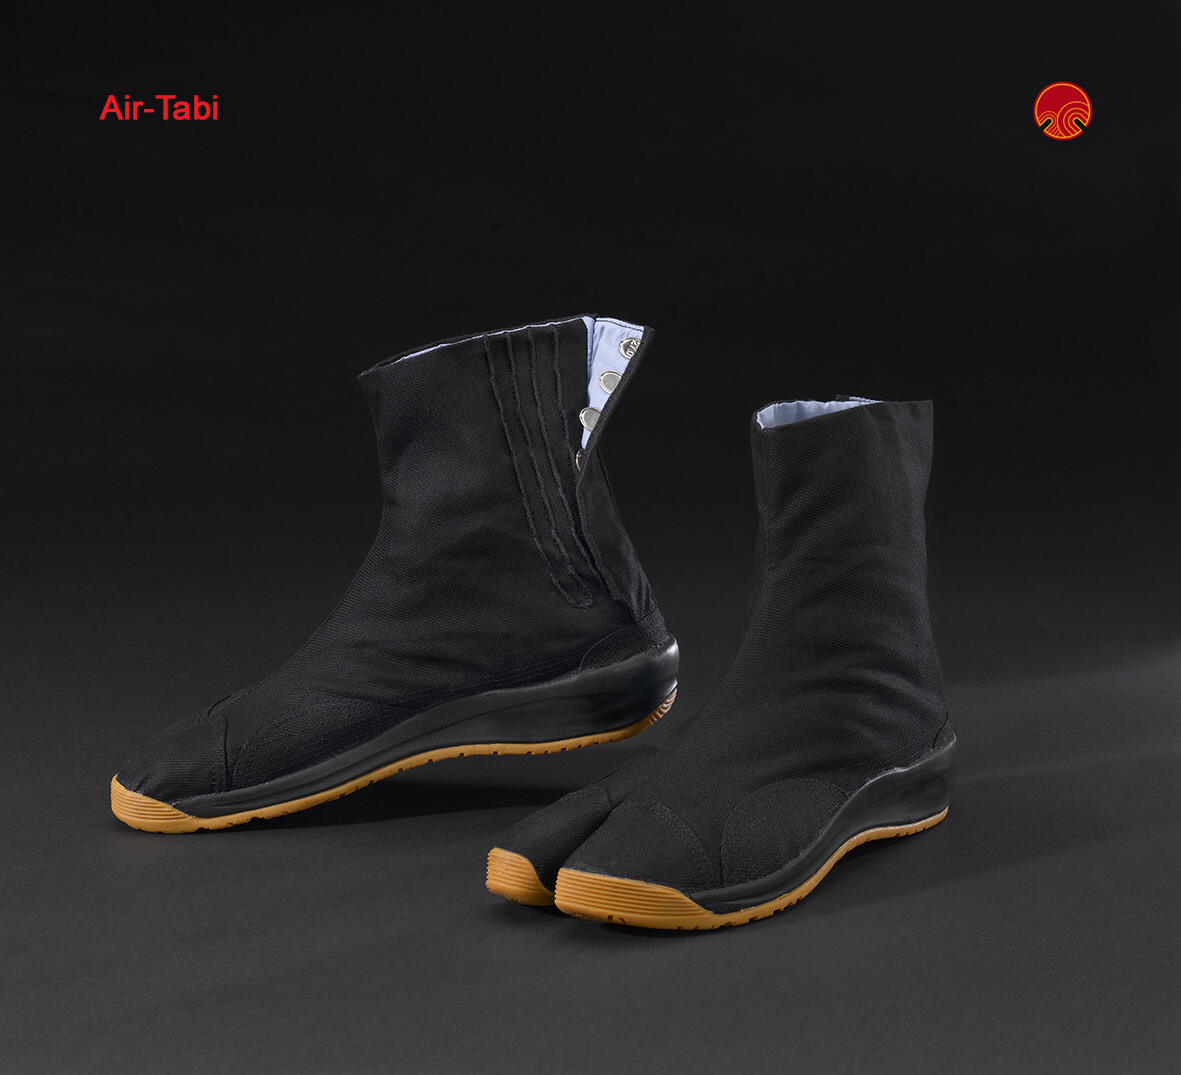 Japanese Matsuri Air Tabi-Shoes in black (60€)